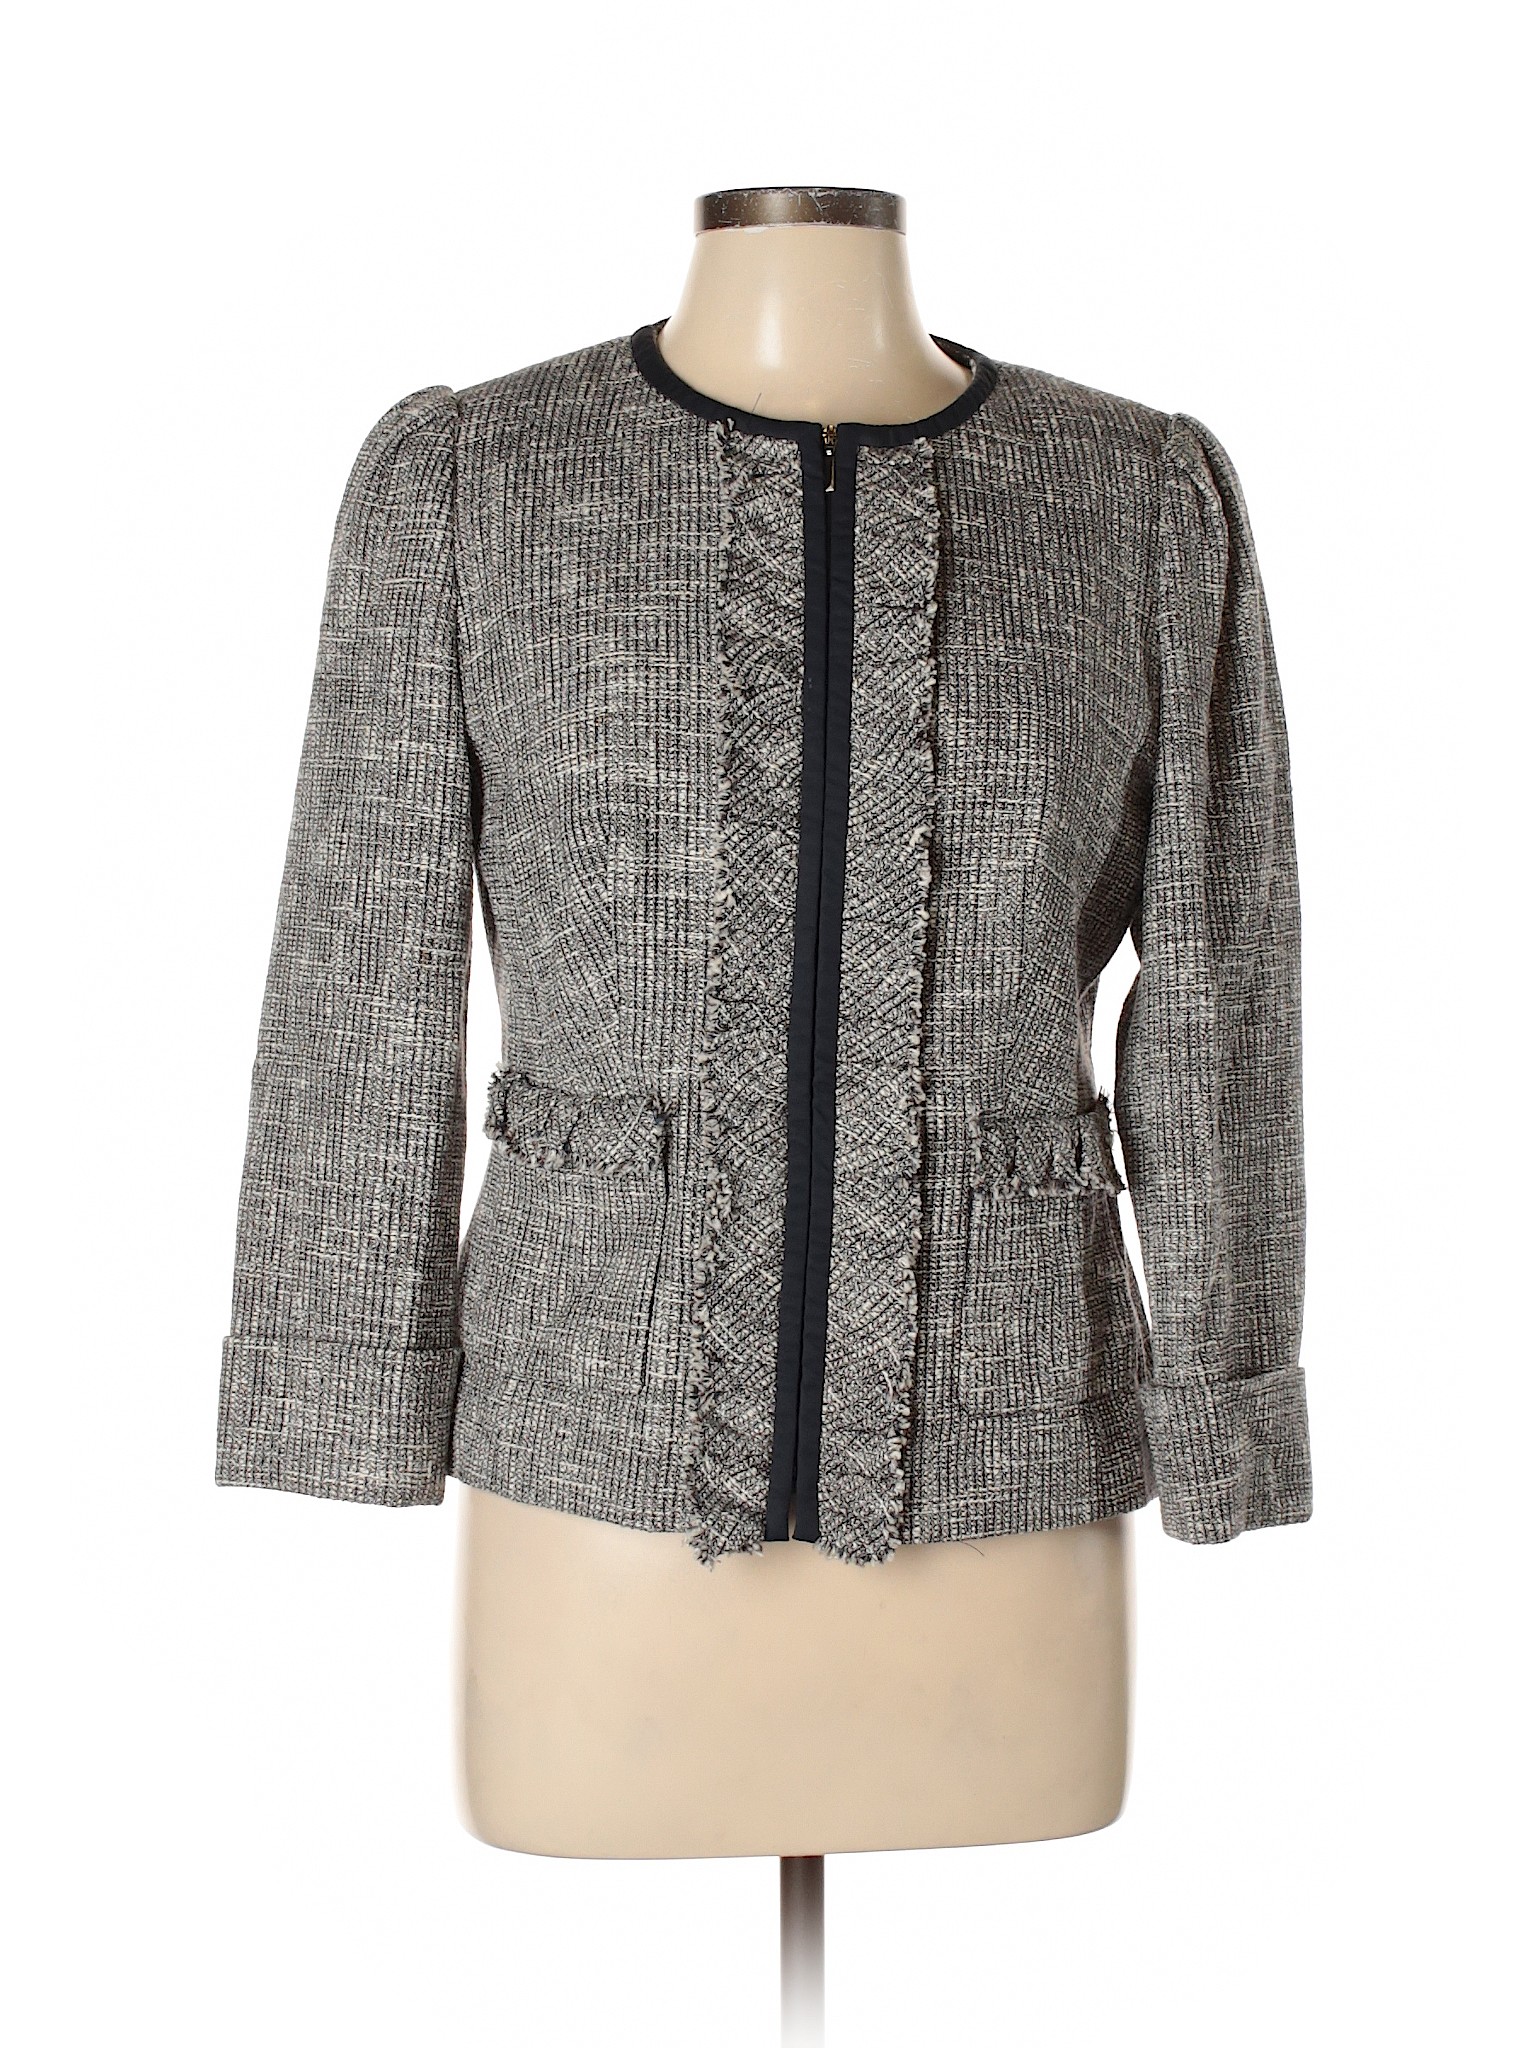 Billabong Women Gray Jacket 10 | eBay